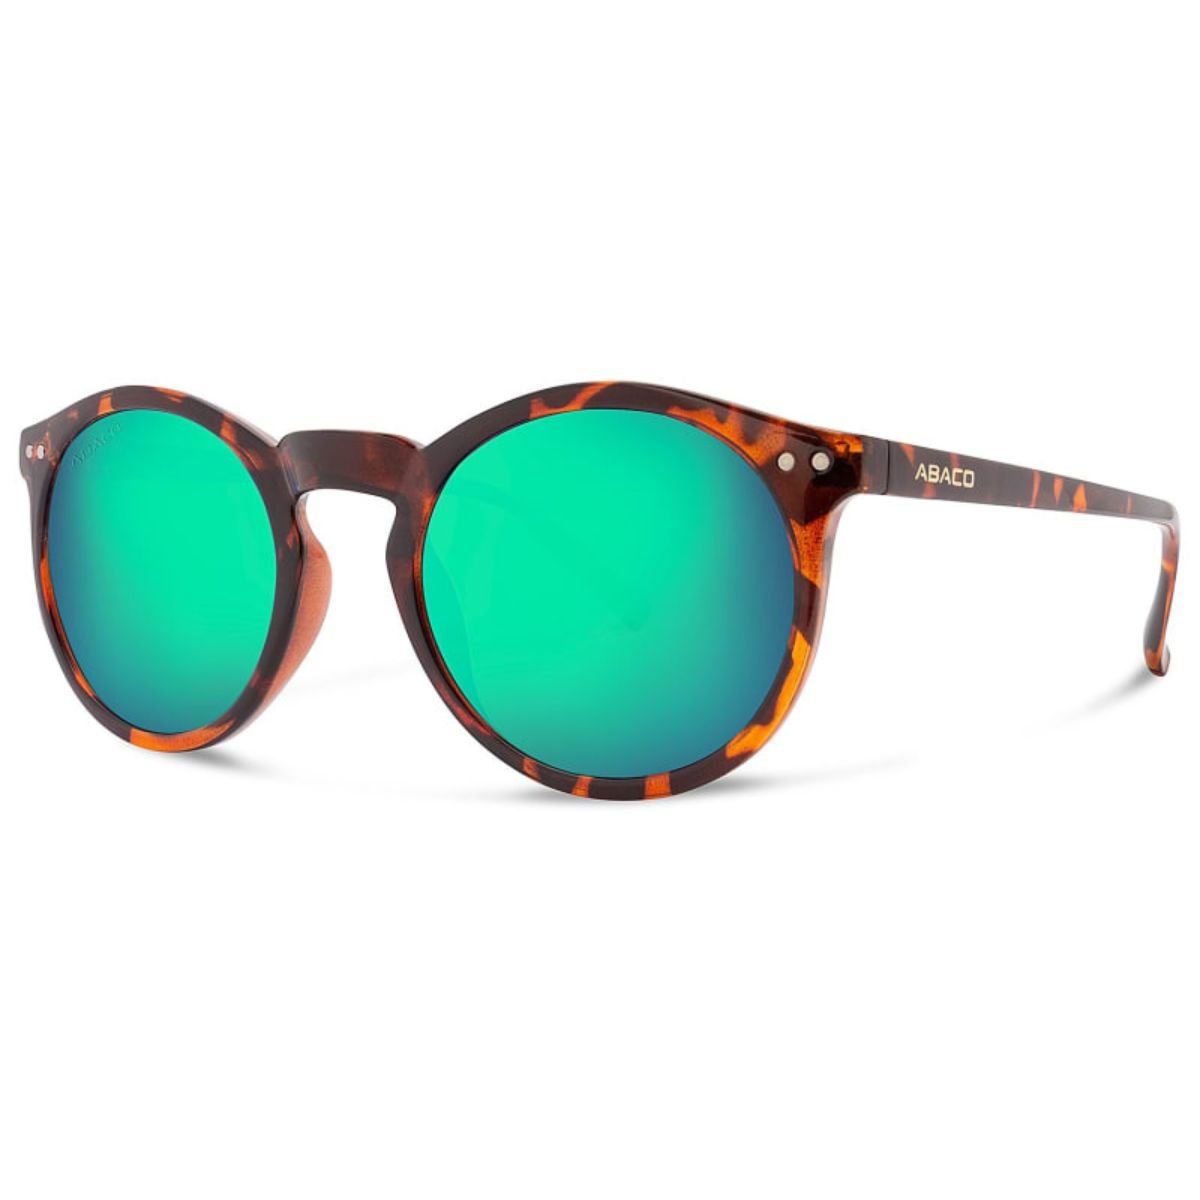 Abaco Vero Sunglasses in Tortoise/Ocean - BoardCo